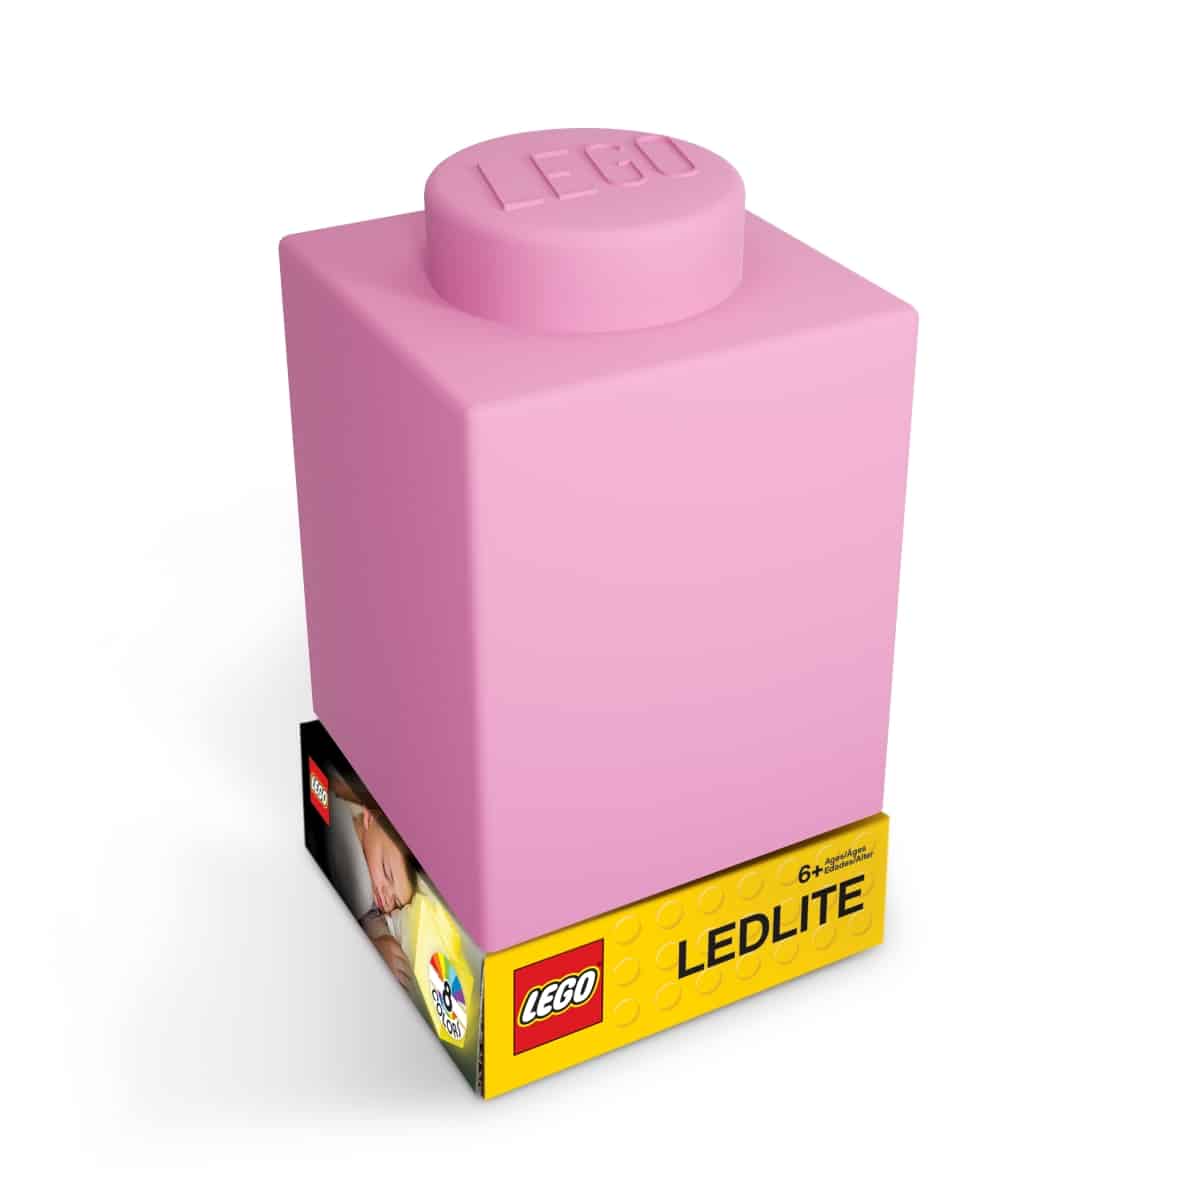 1x1 brick nitelite pink 5007232